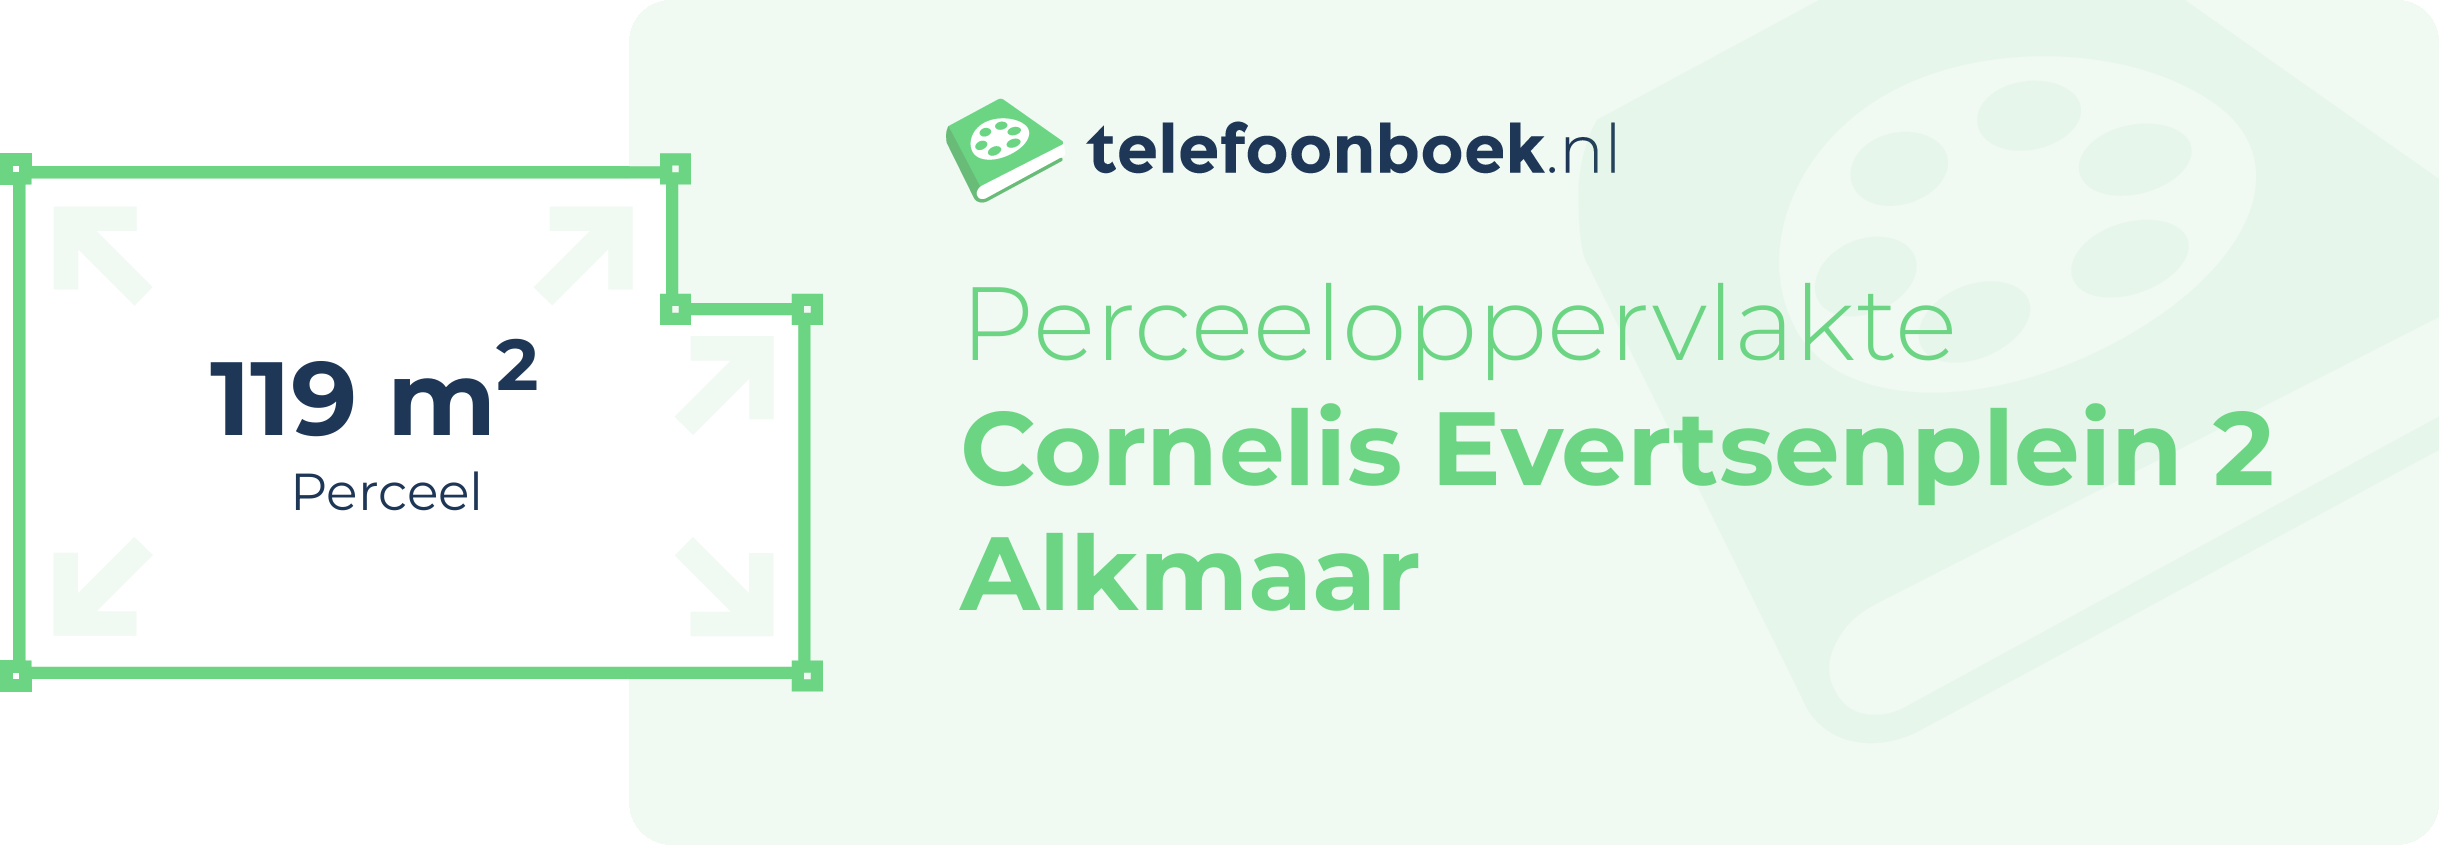 Perceeloppervlakte Cornelis Evertsenplein 2 Alkmaar